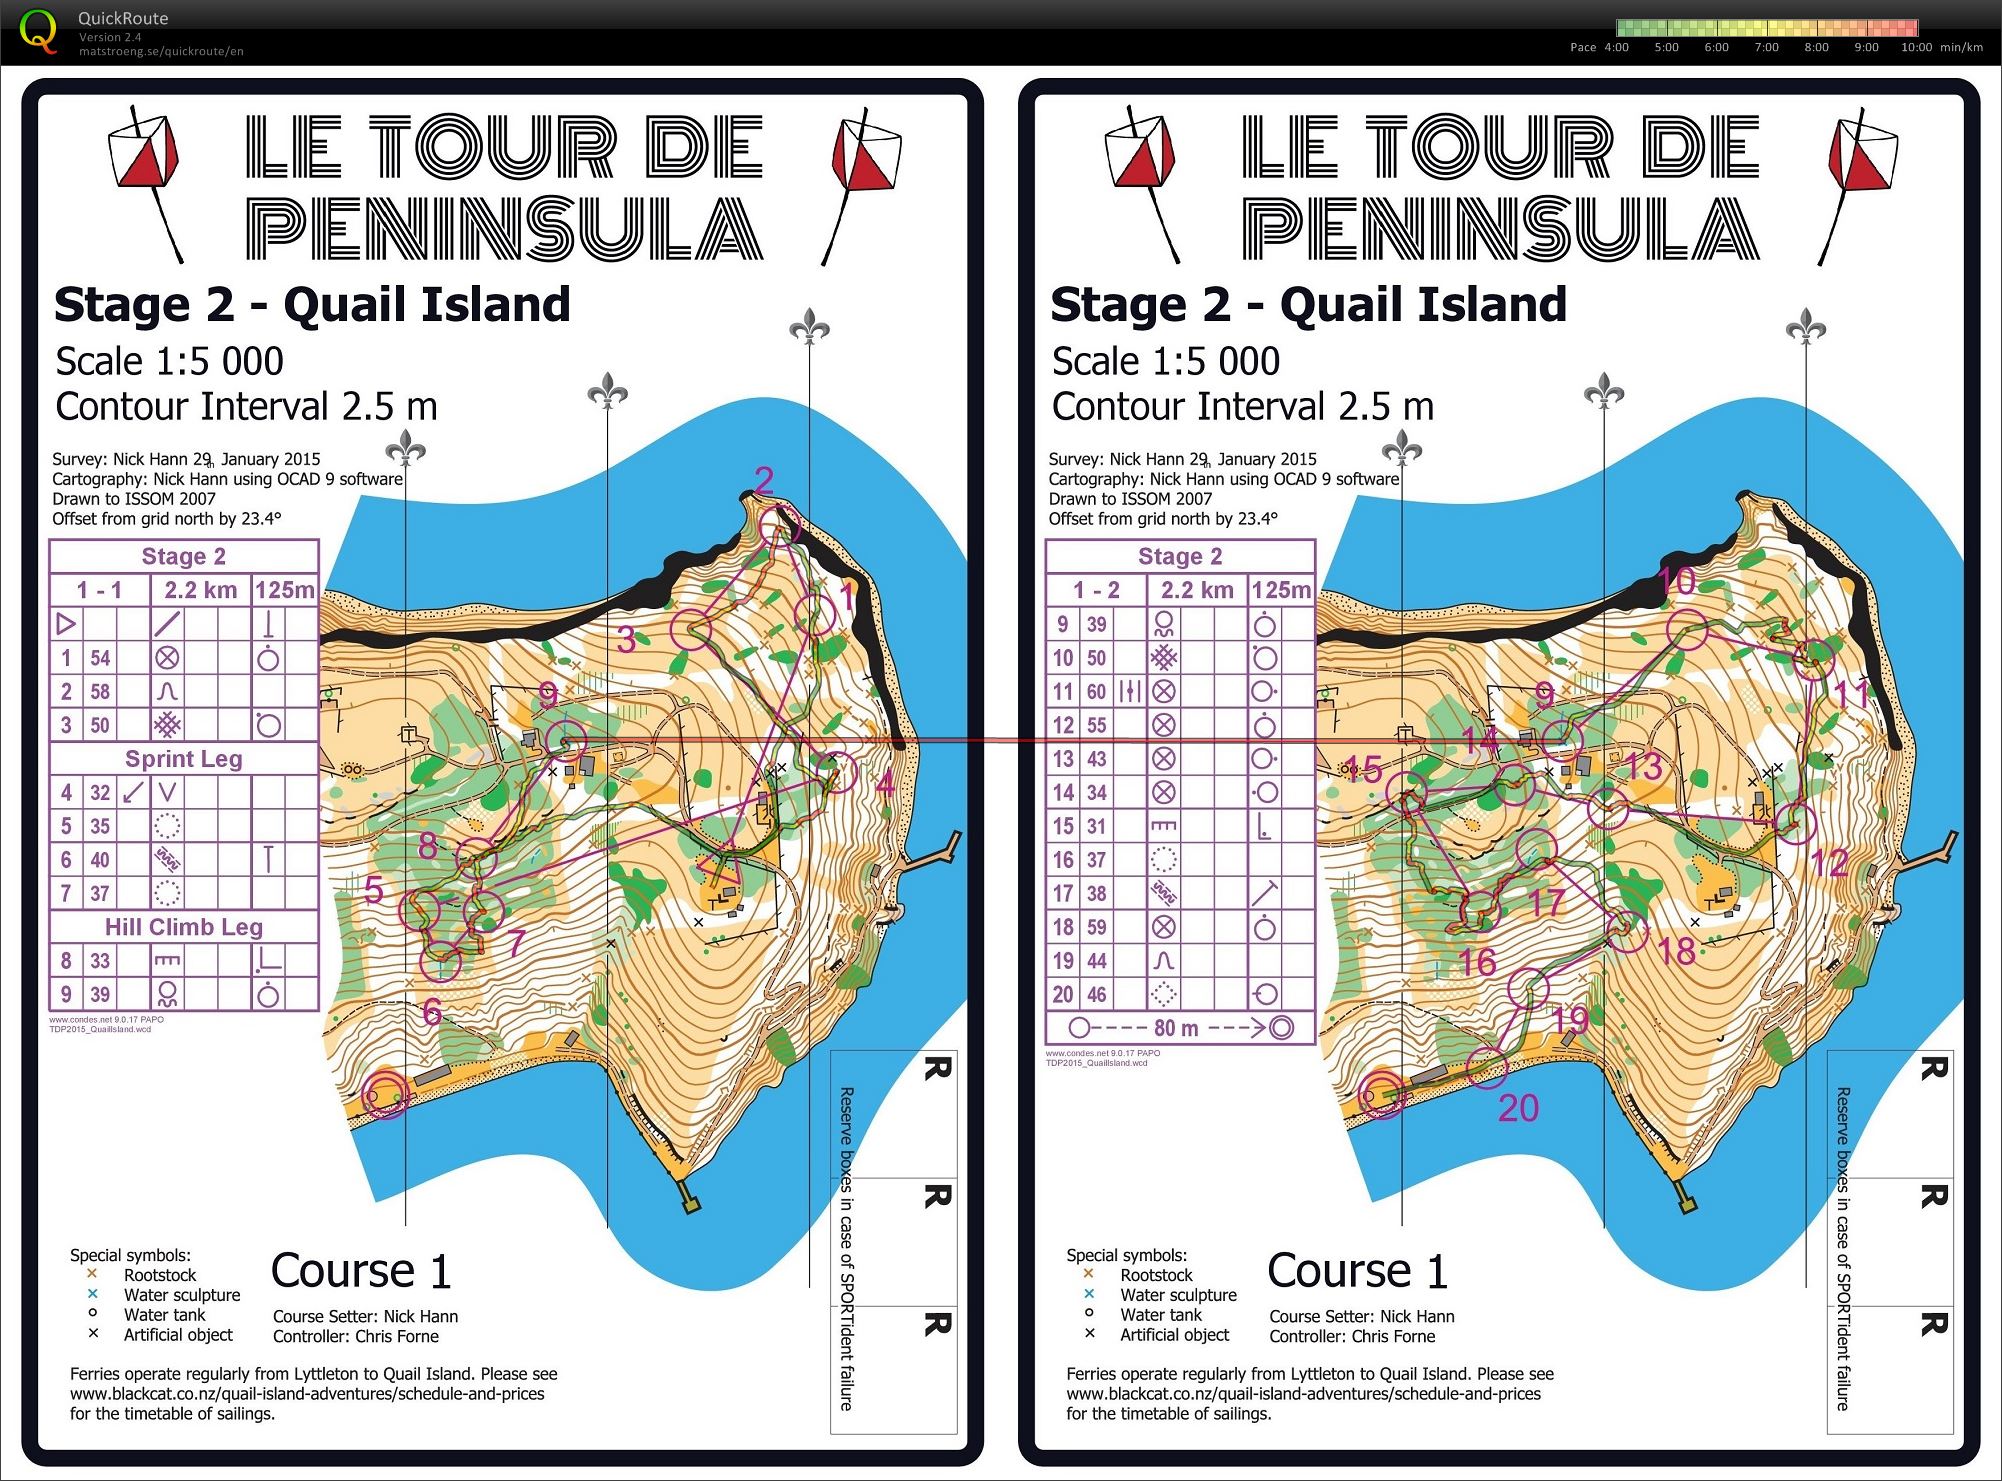 Tour De Peninsula Stage 2 (2015-02-06)